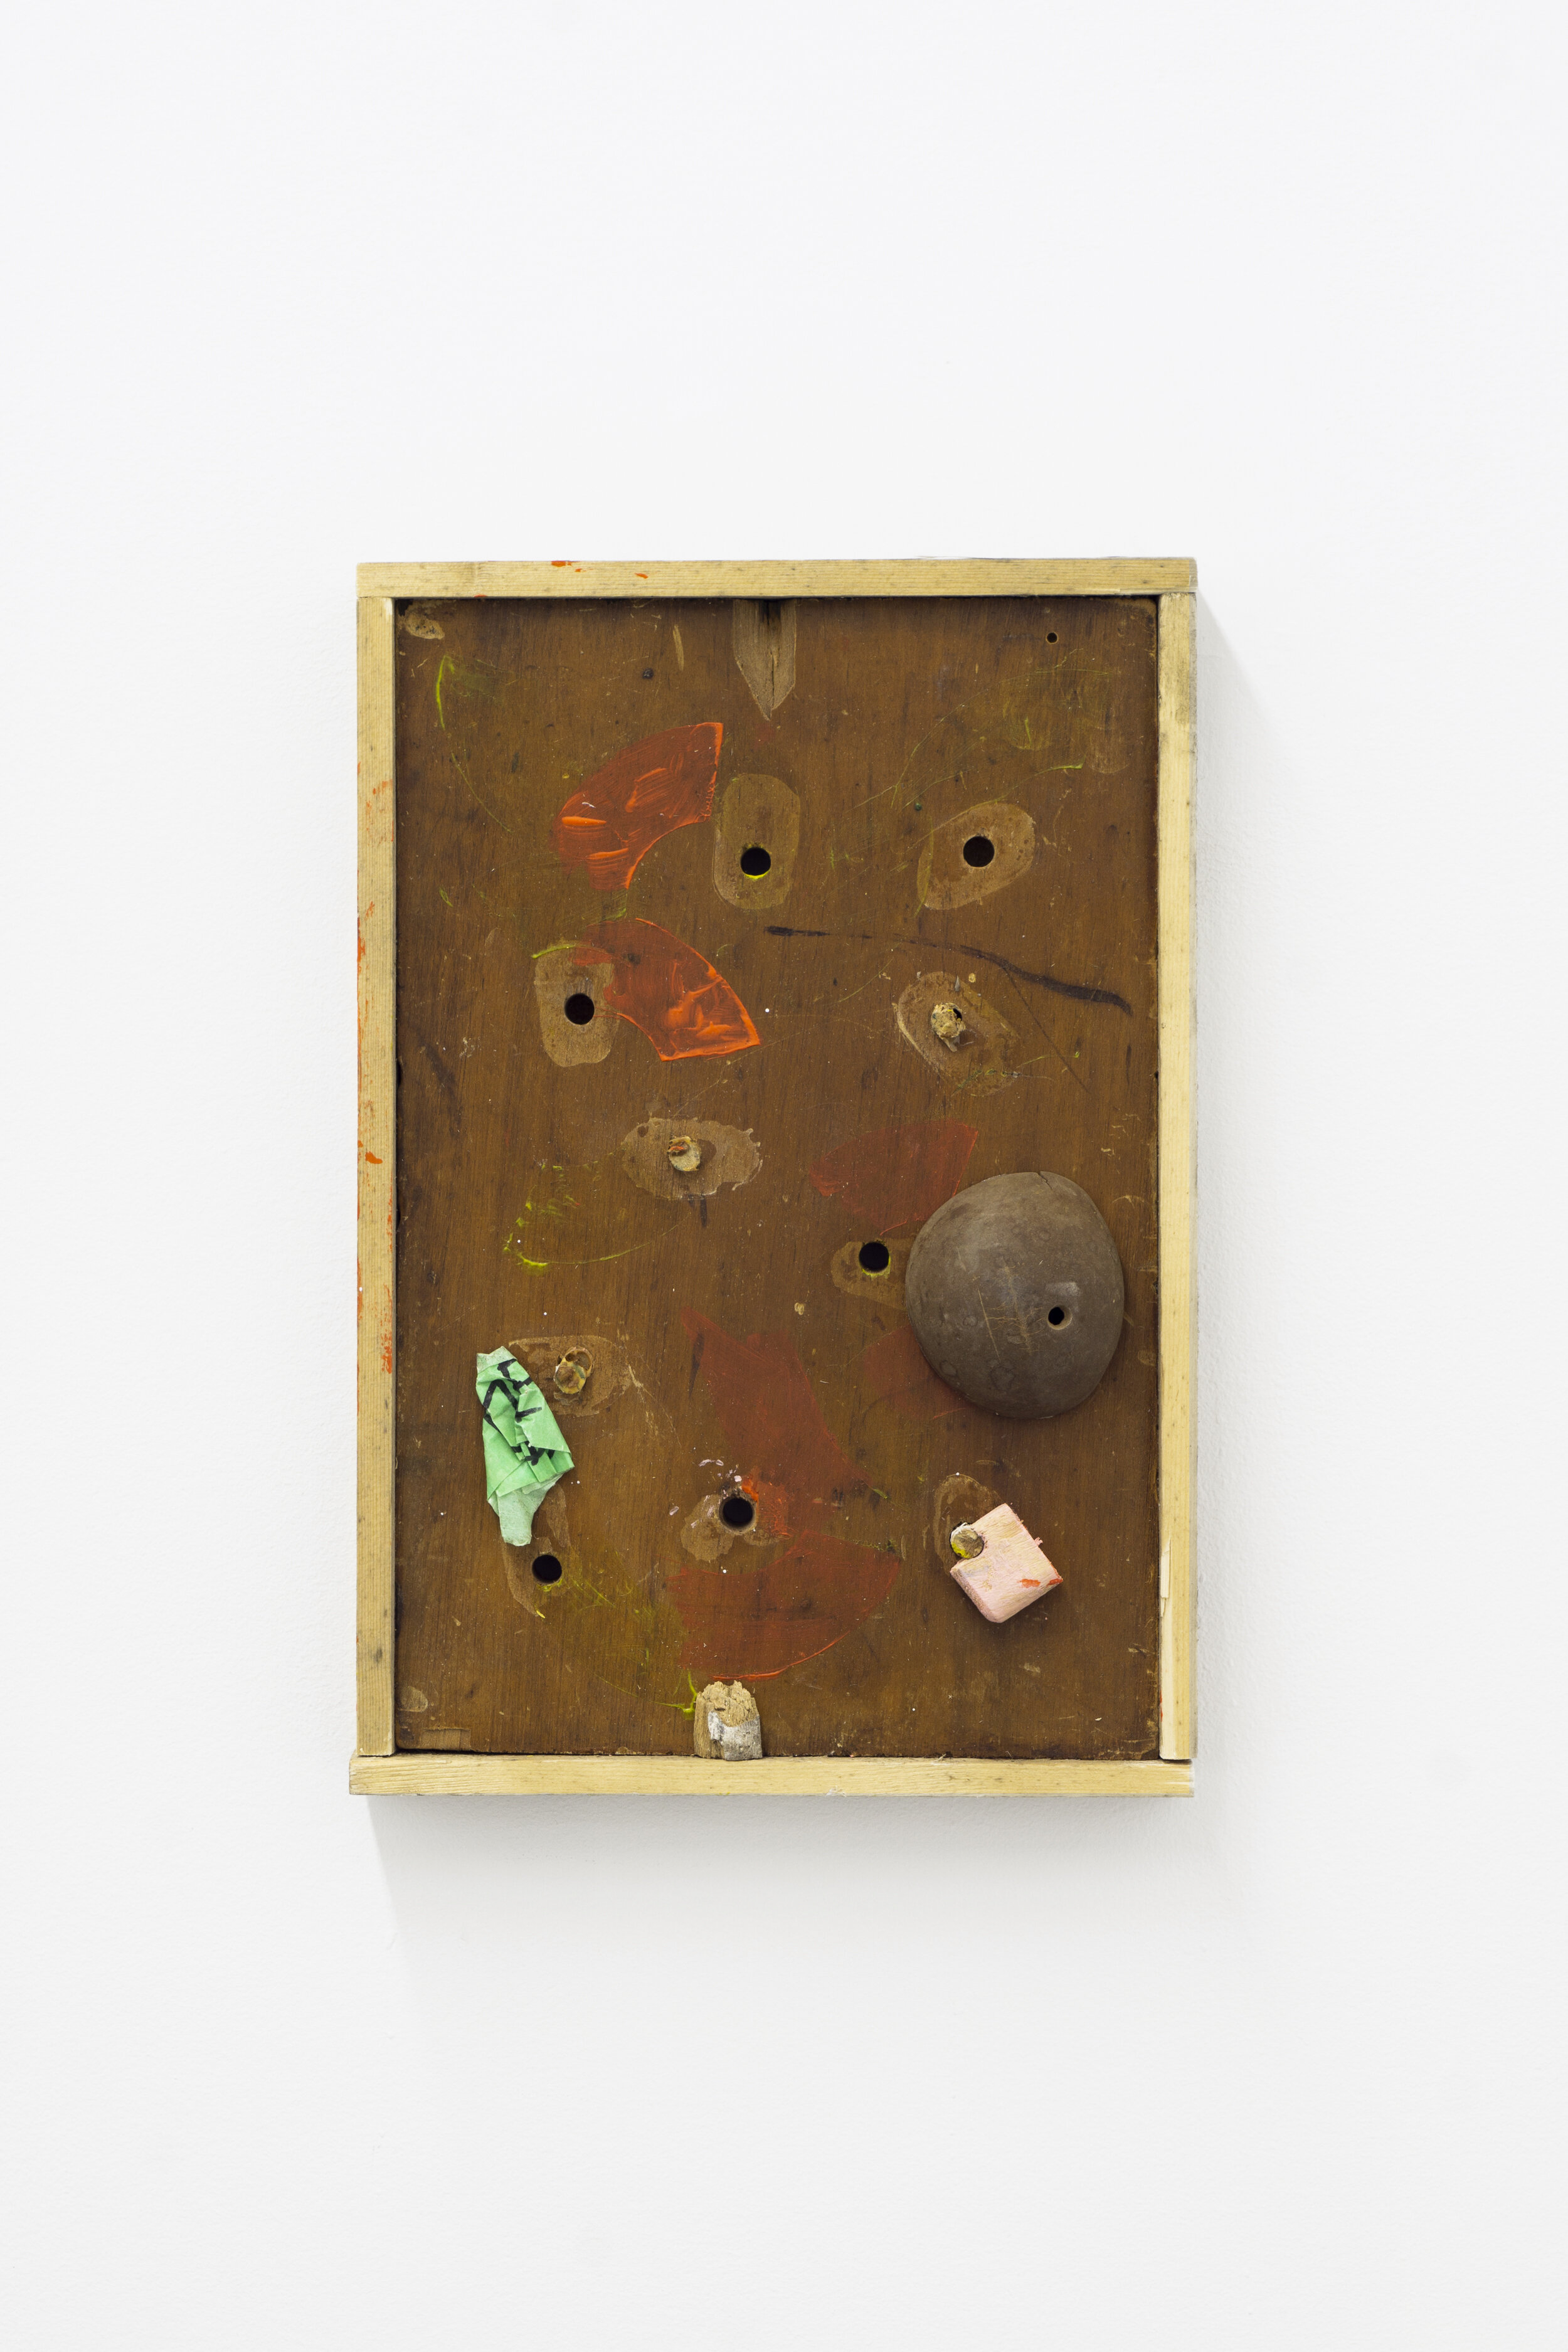  Georgia Dickie,  Bulb , 2021, Found objects and wood, 12.75 x 8.75 x 2.5 in (32.4 x 22.2 x 6.4 cm)  